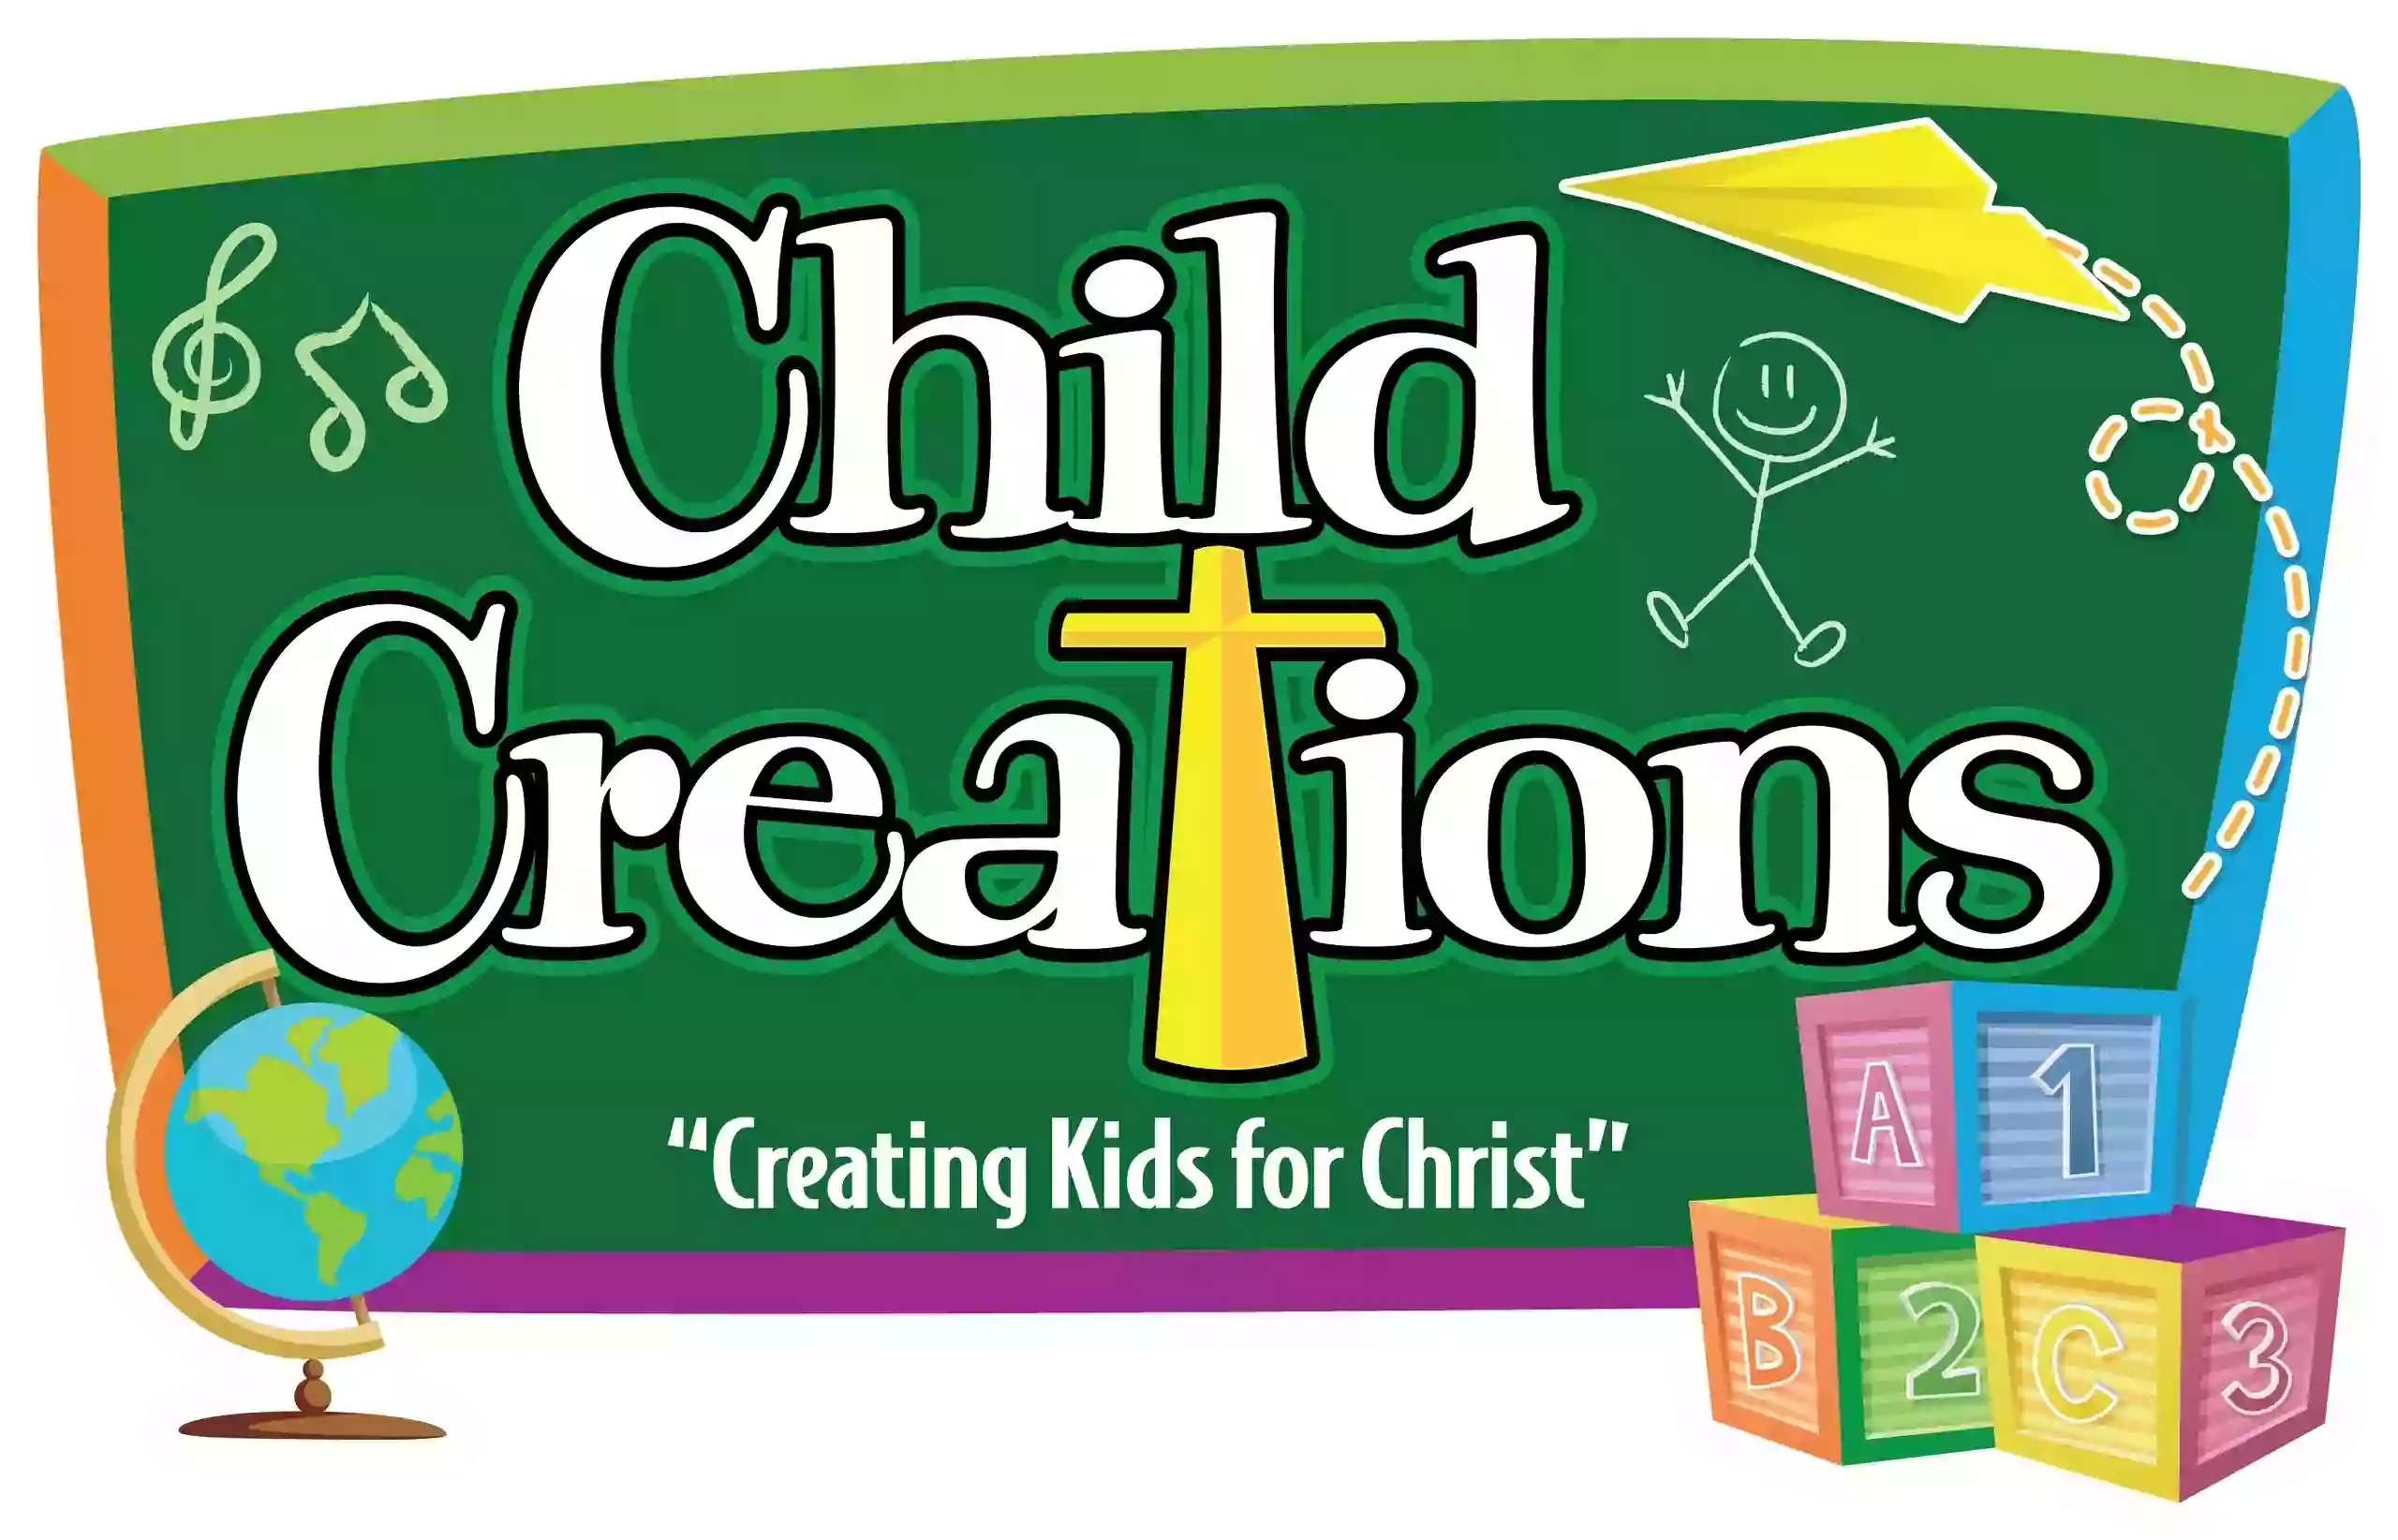 Child Creations